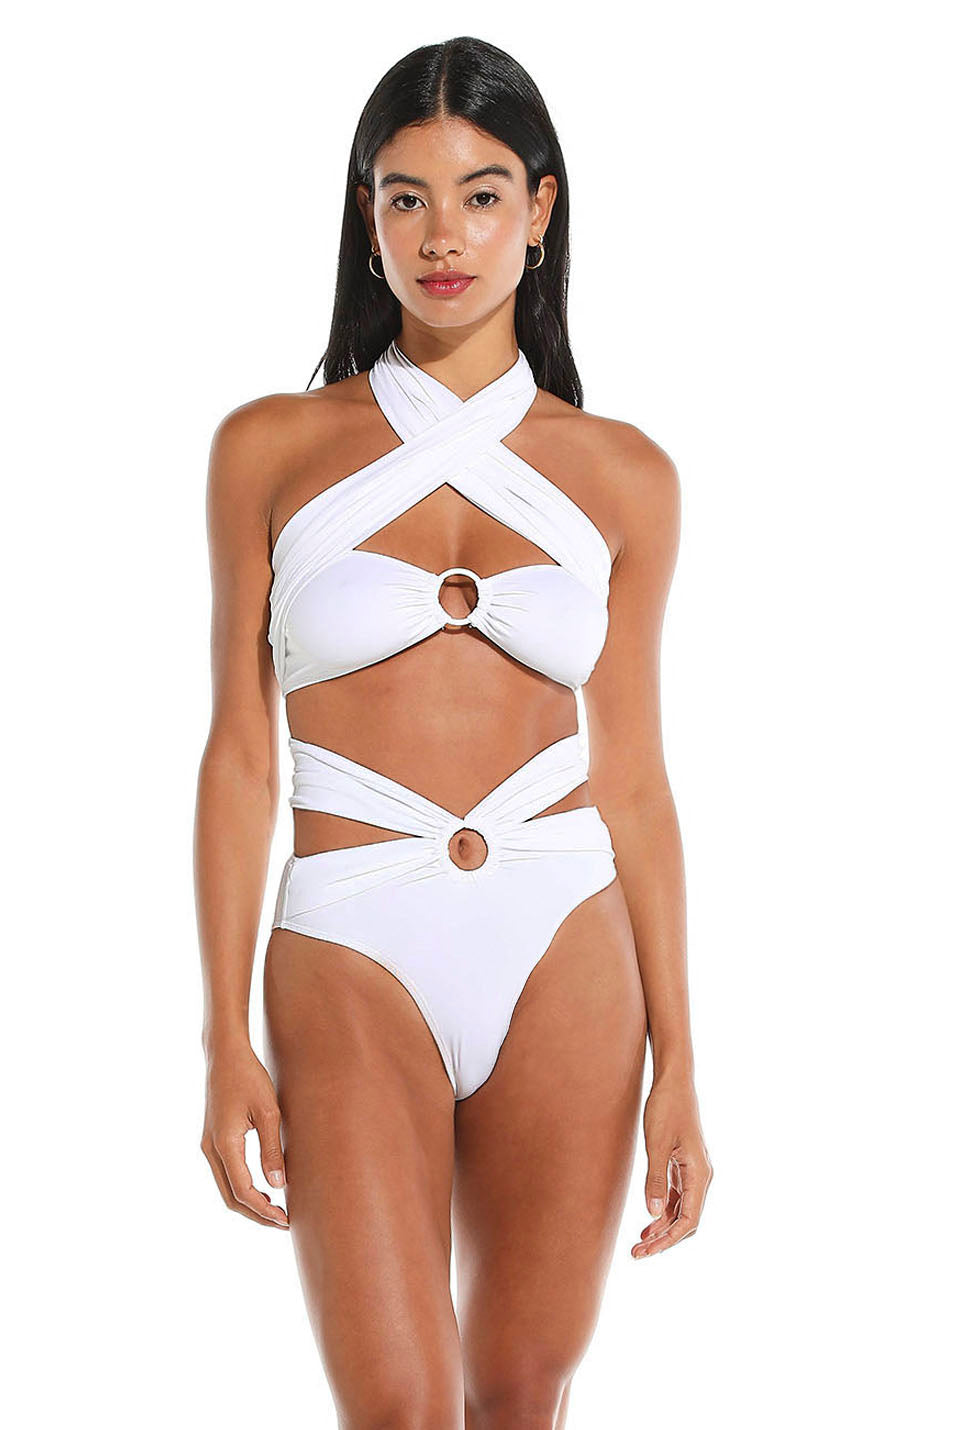 Toghzan bikini top - White